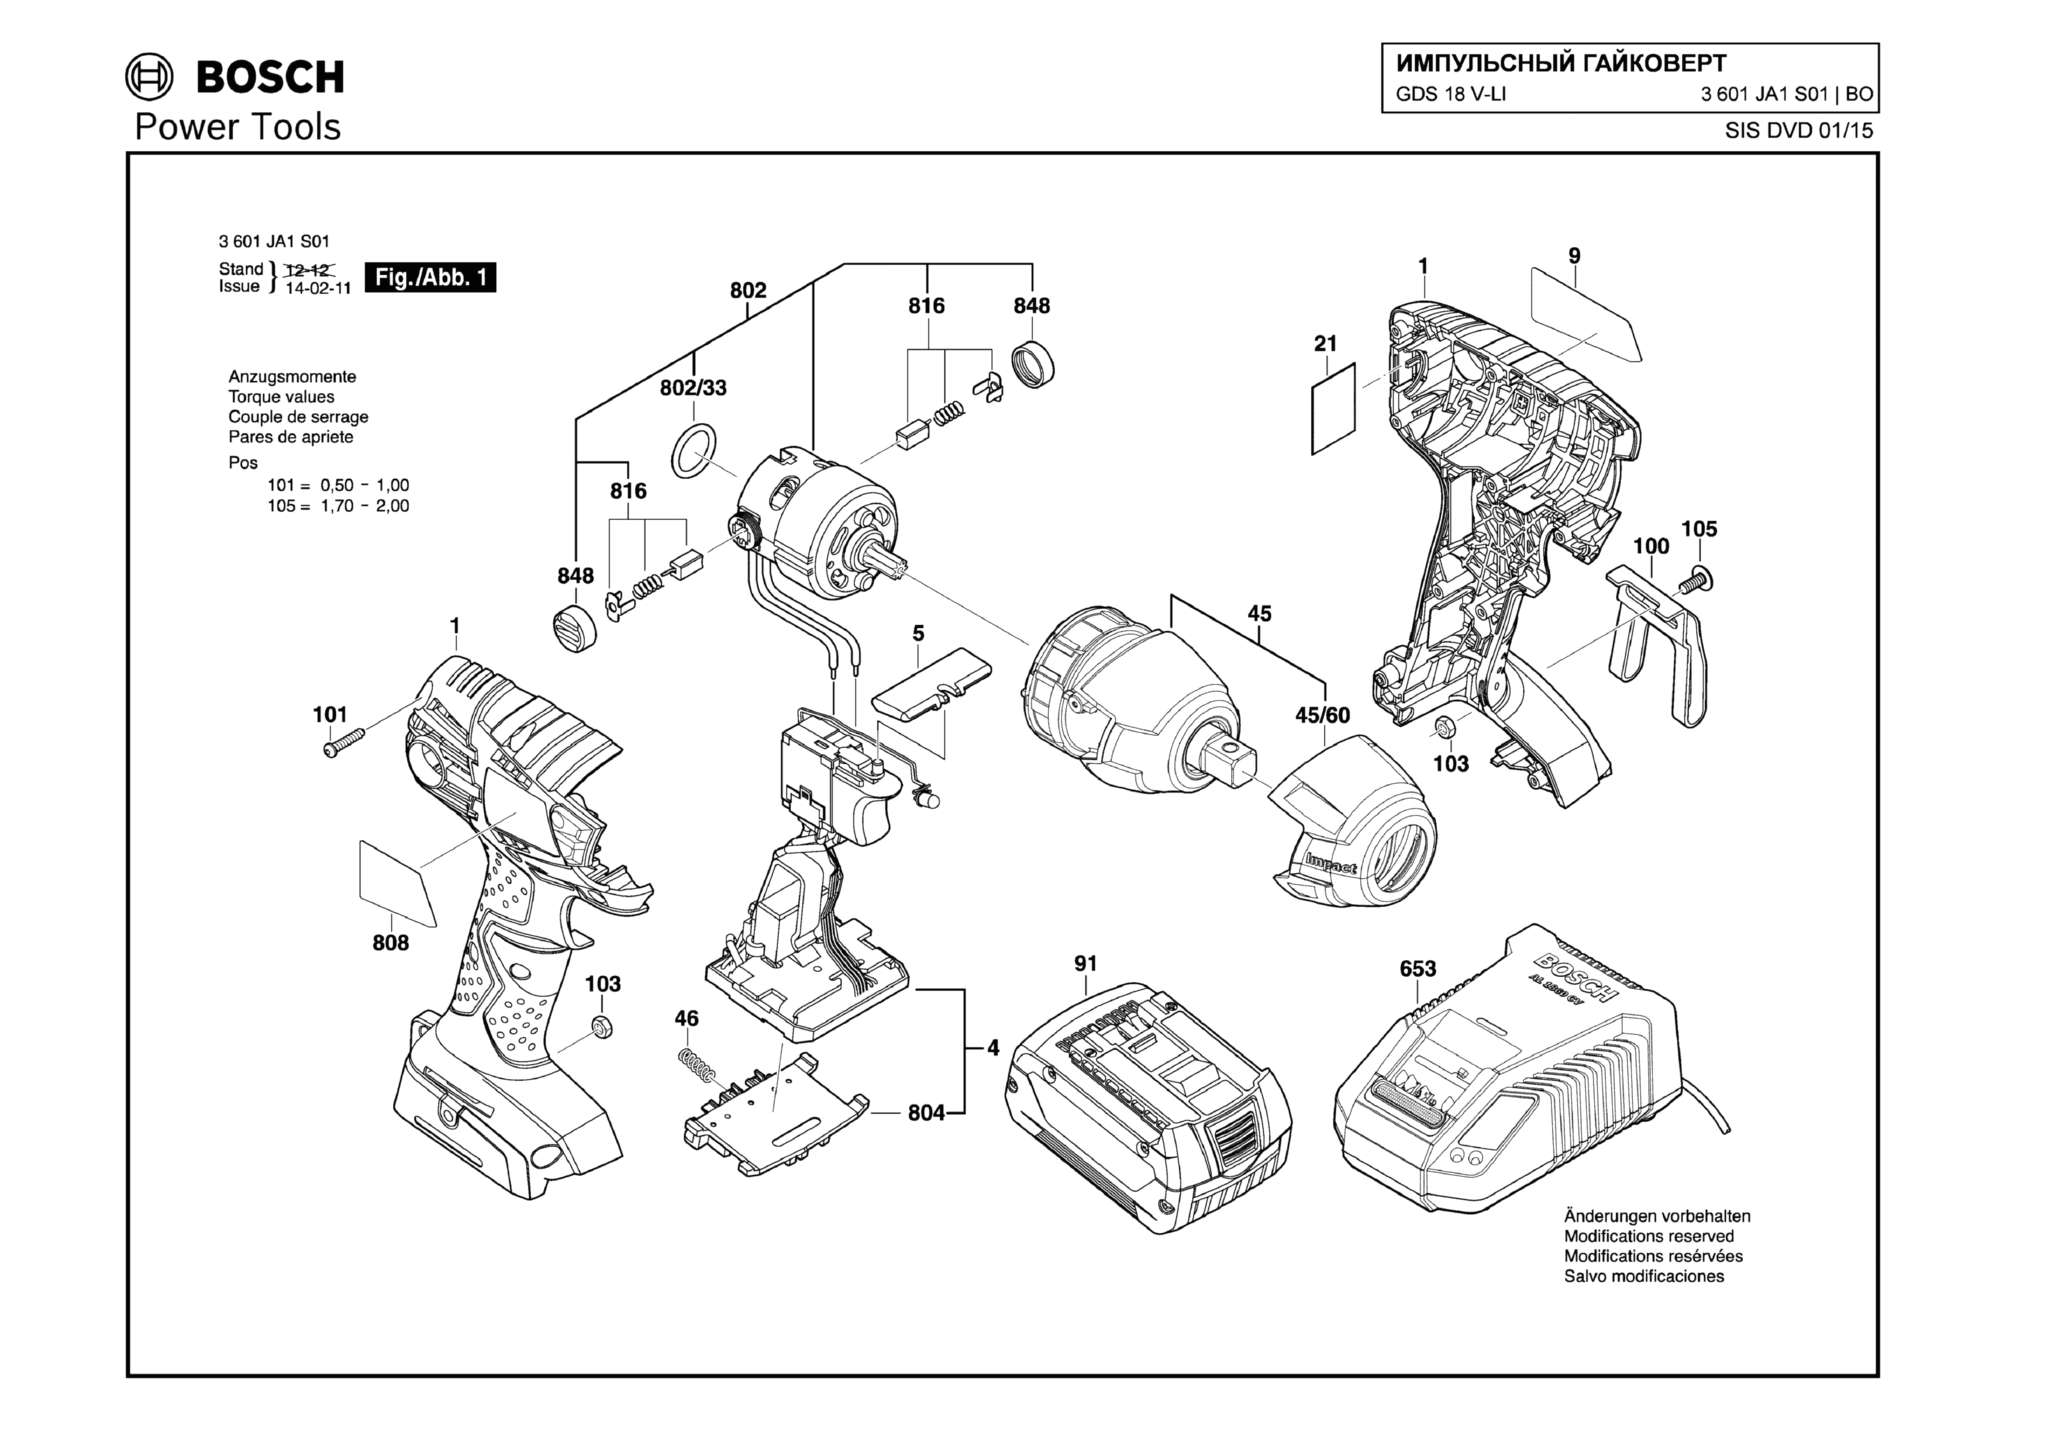 Запчасти, схема и деталировка Bosch GDS 18 V-LI (ТИП 3601JA1S01)